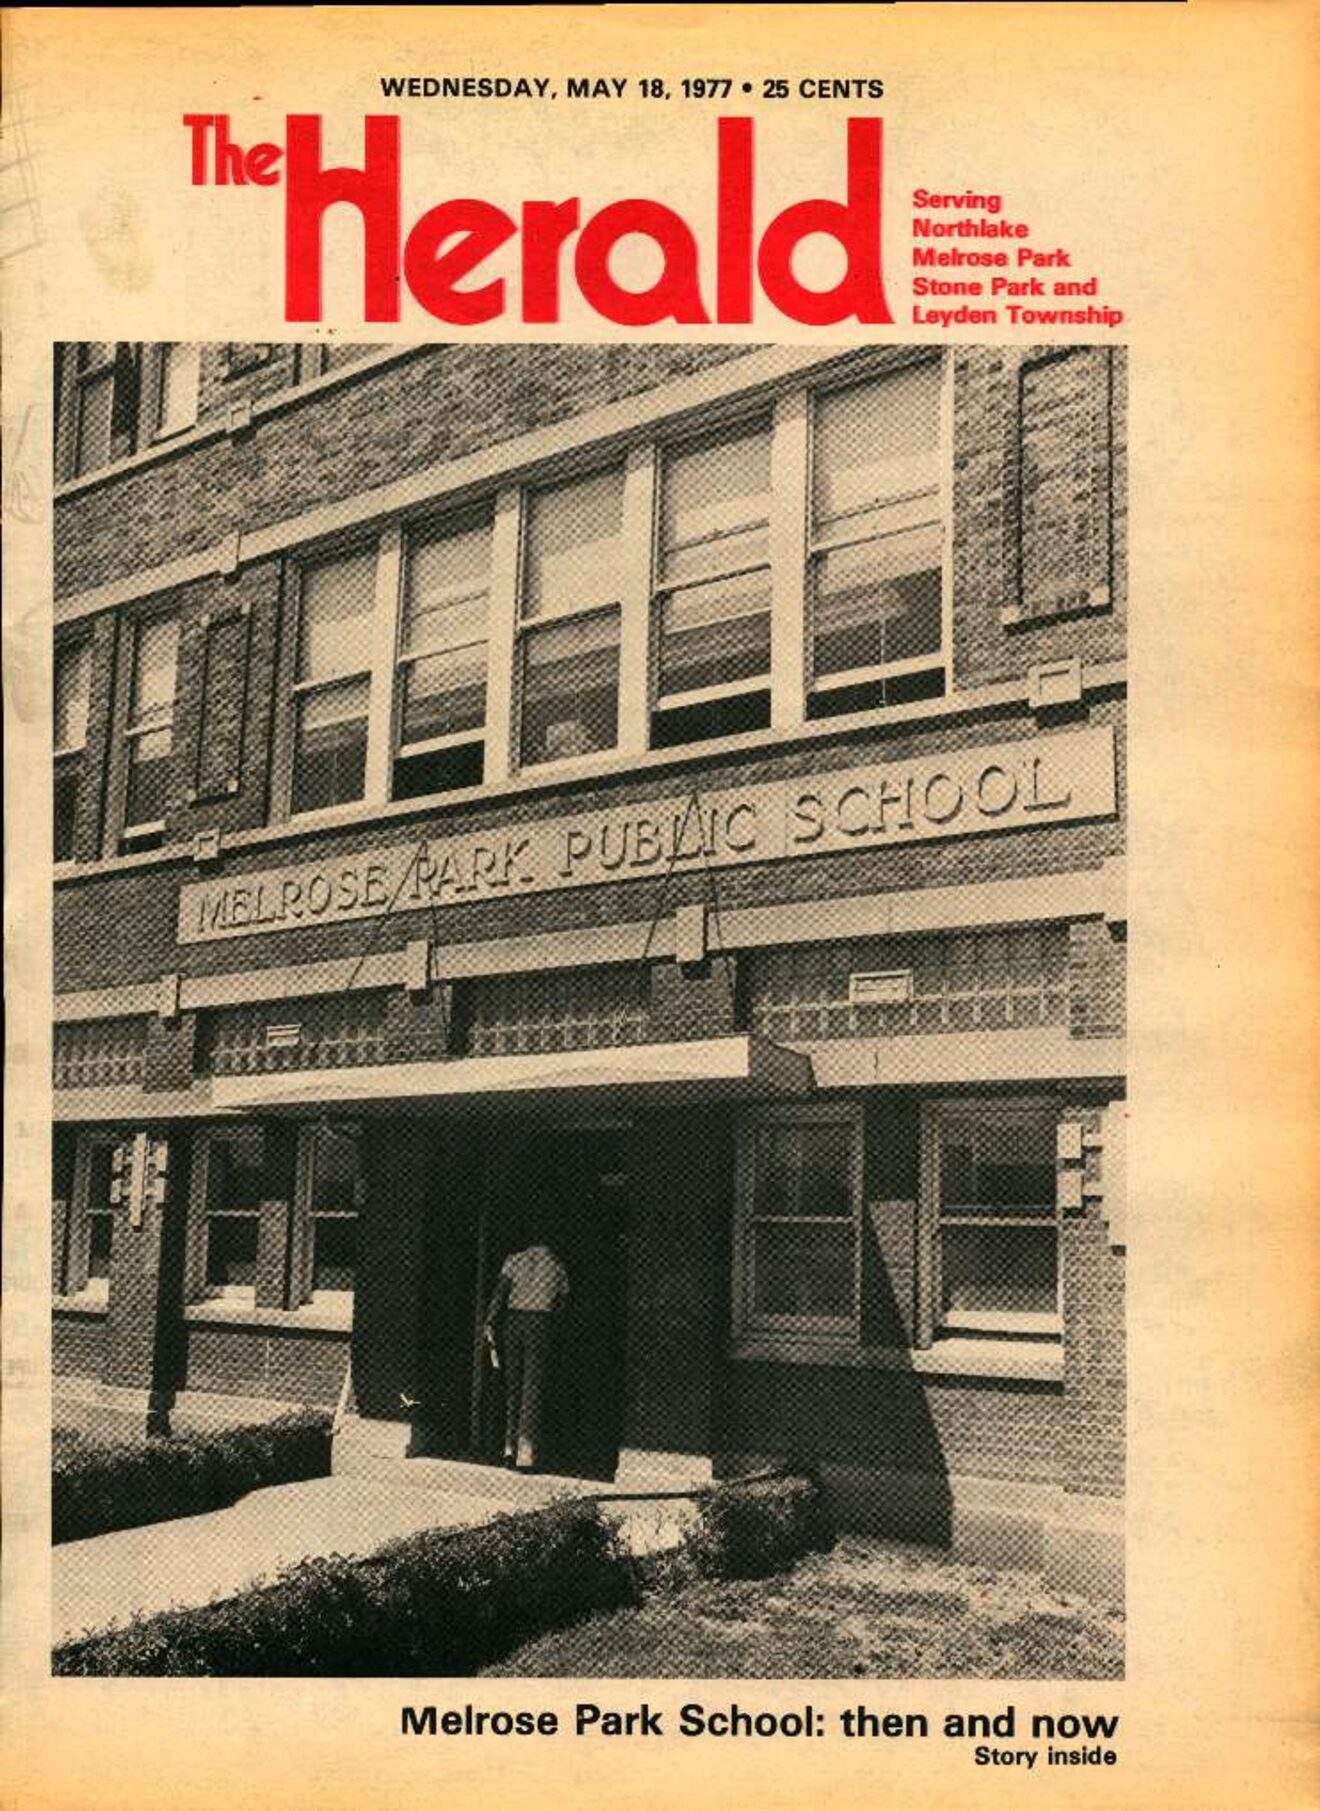 The Herald – 19770518